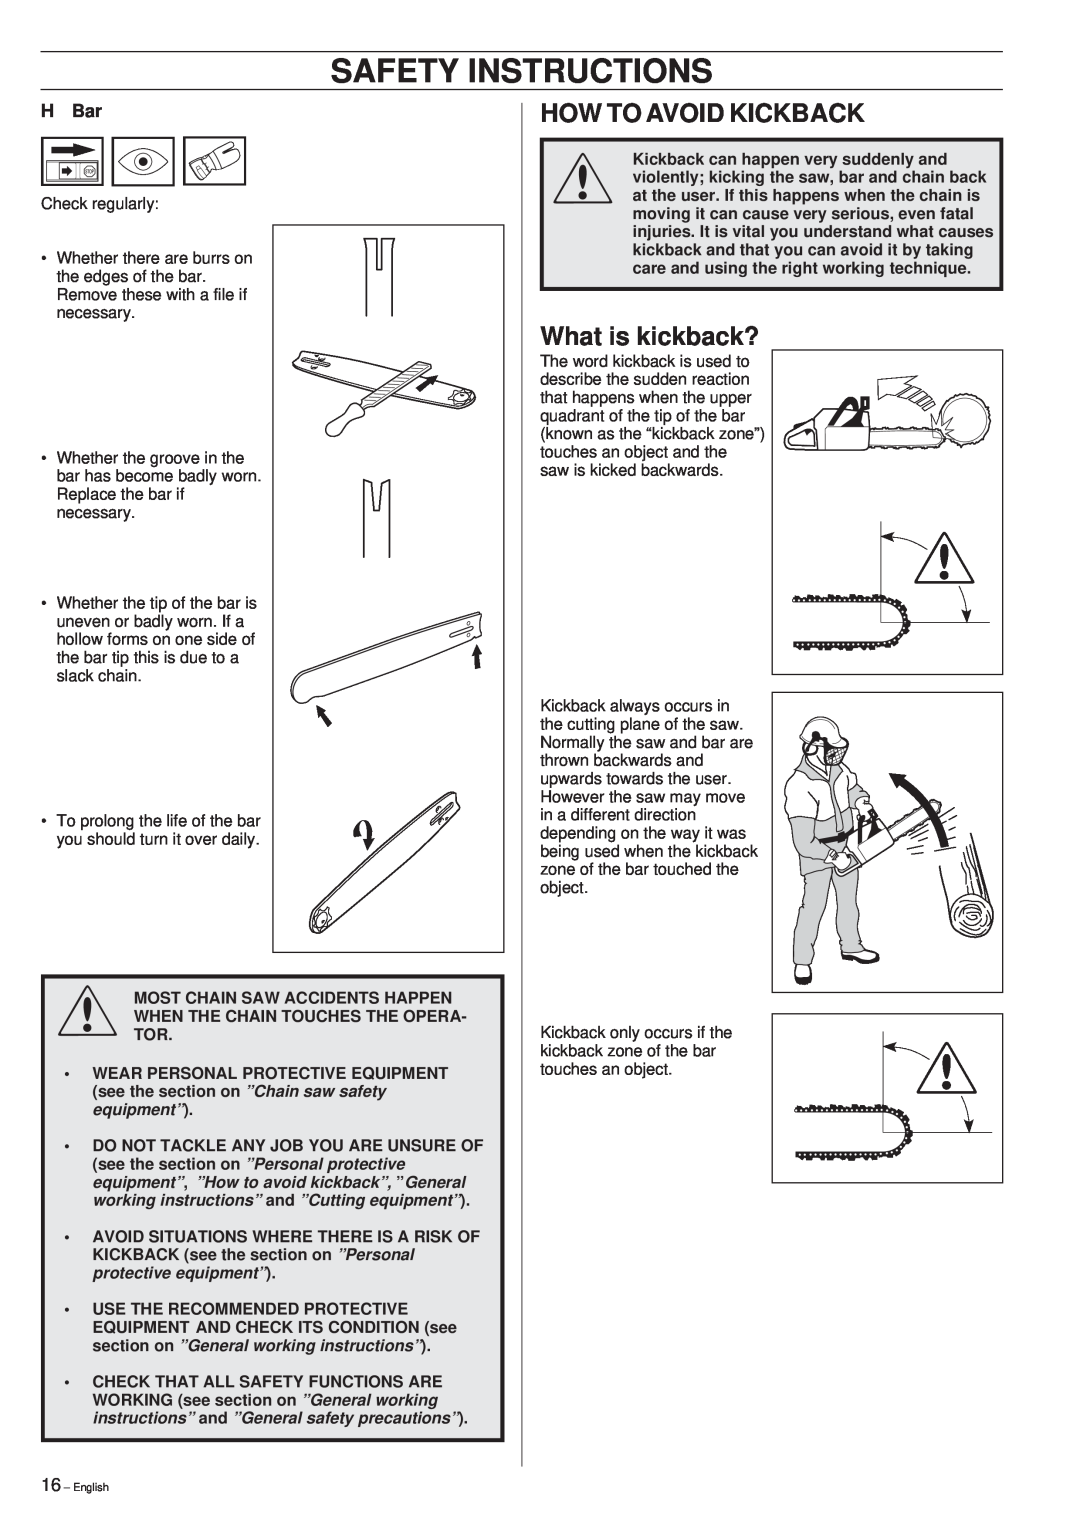 Husqvarna 40 manual How To Avoid Kickback, What is kickback?, Safety Instructions, H Bar 